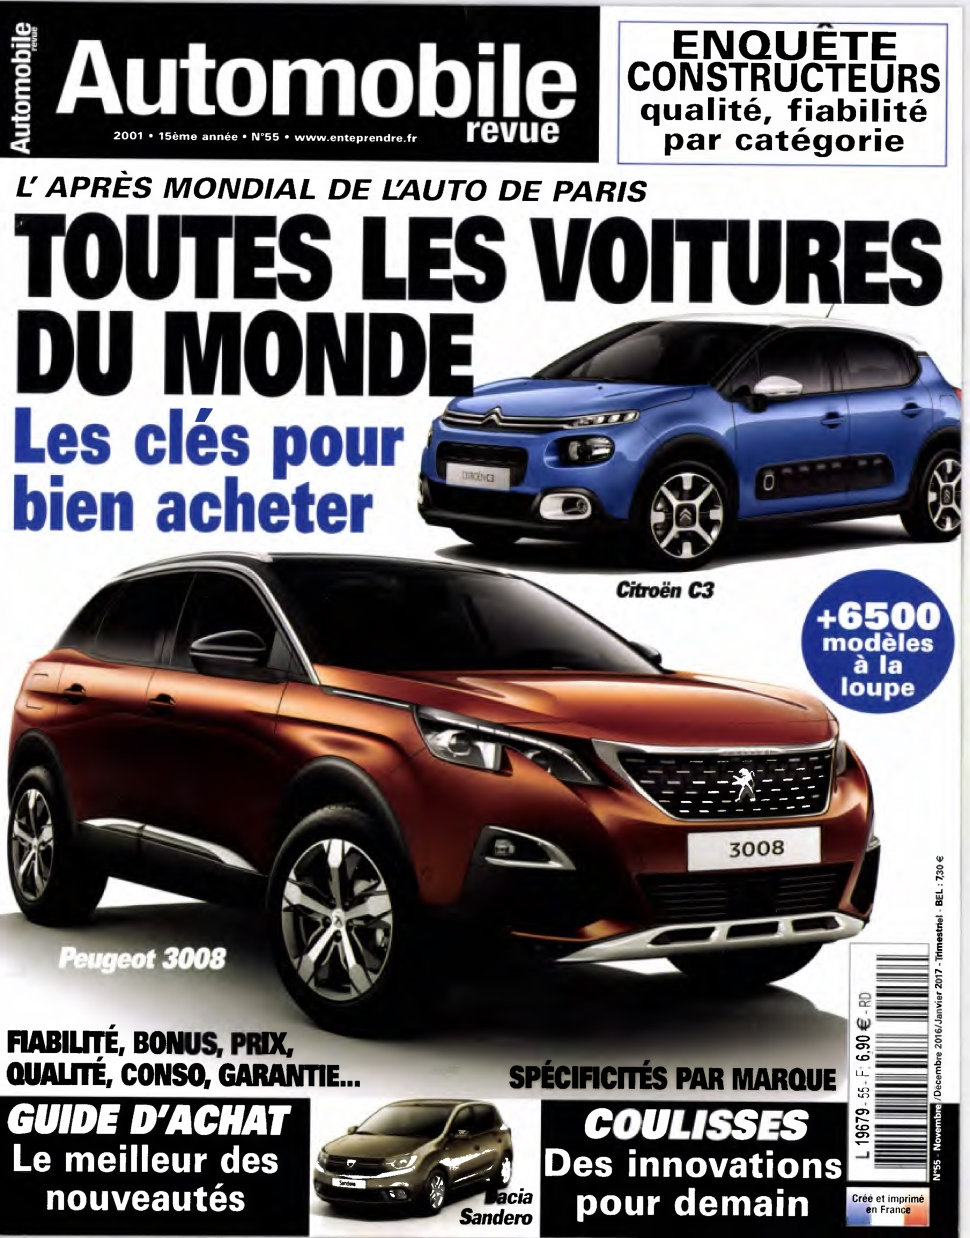 Automobile revue N°55 - Novembre 2016 - Janvier 2017